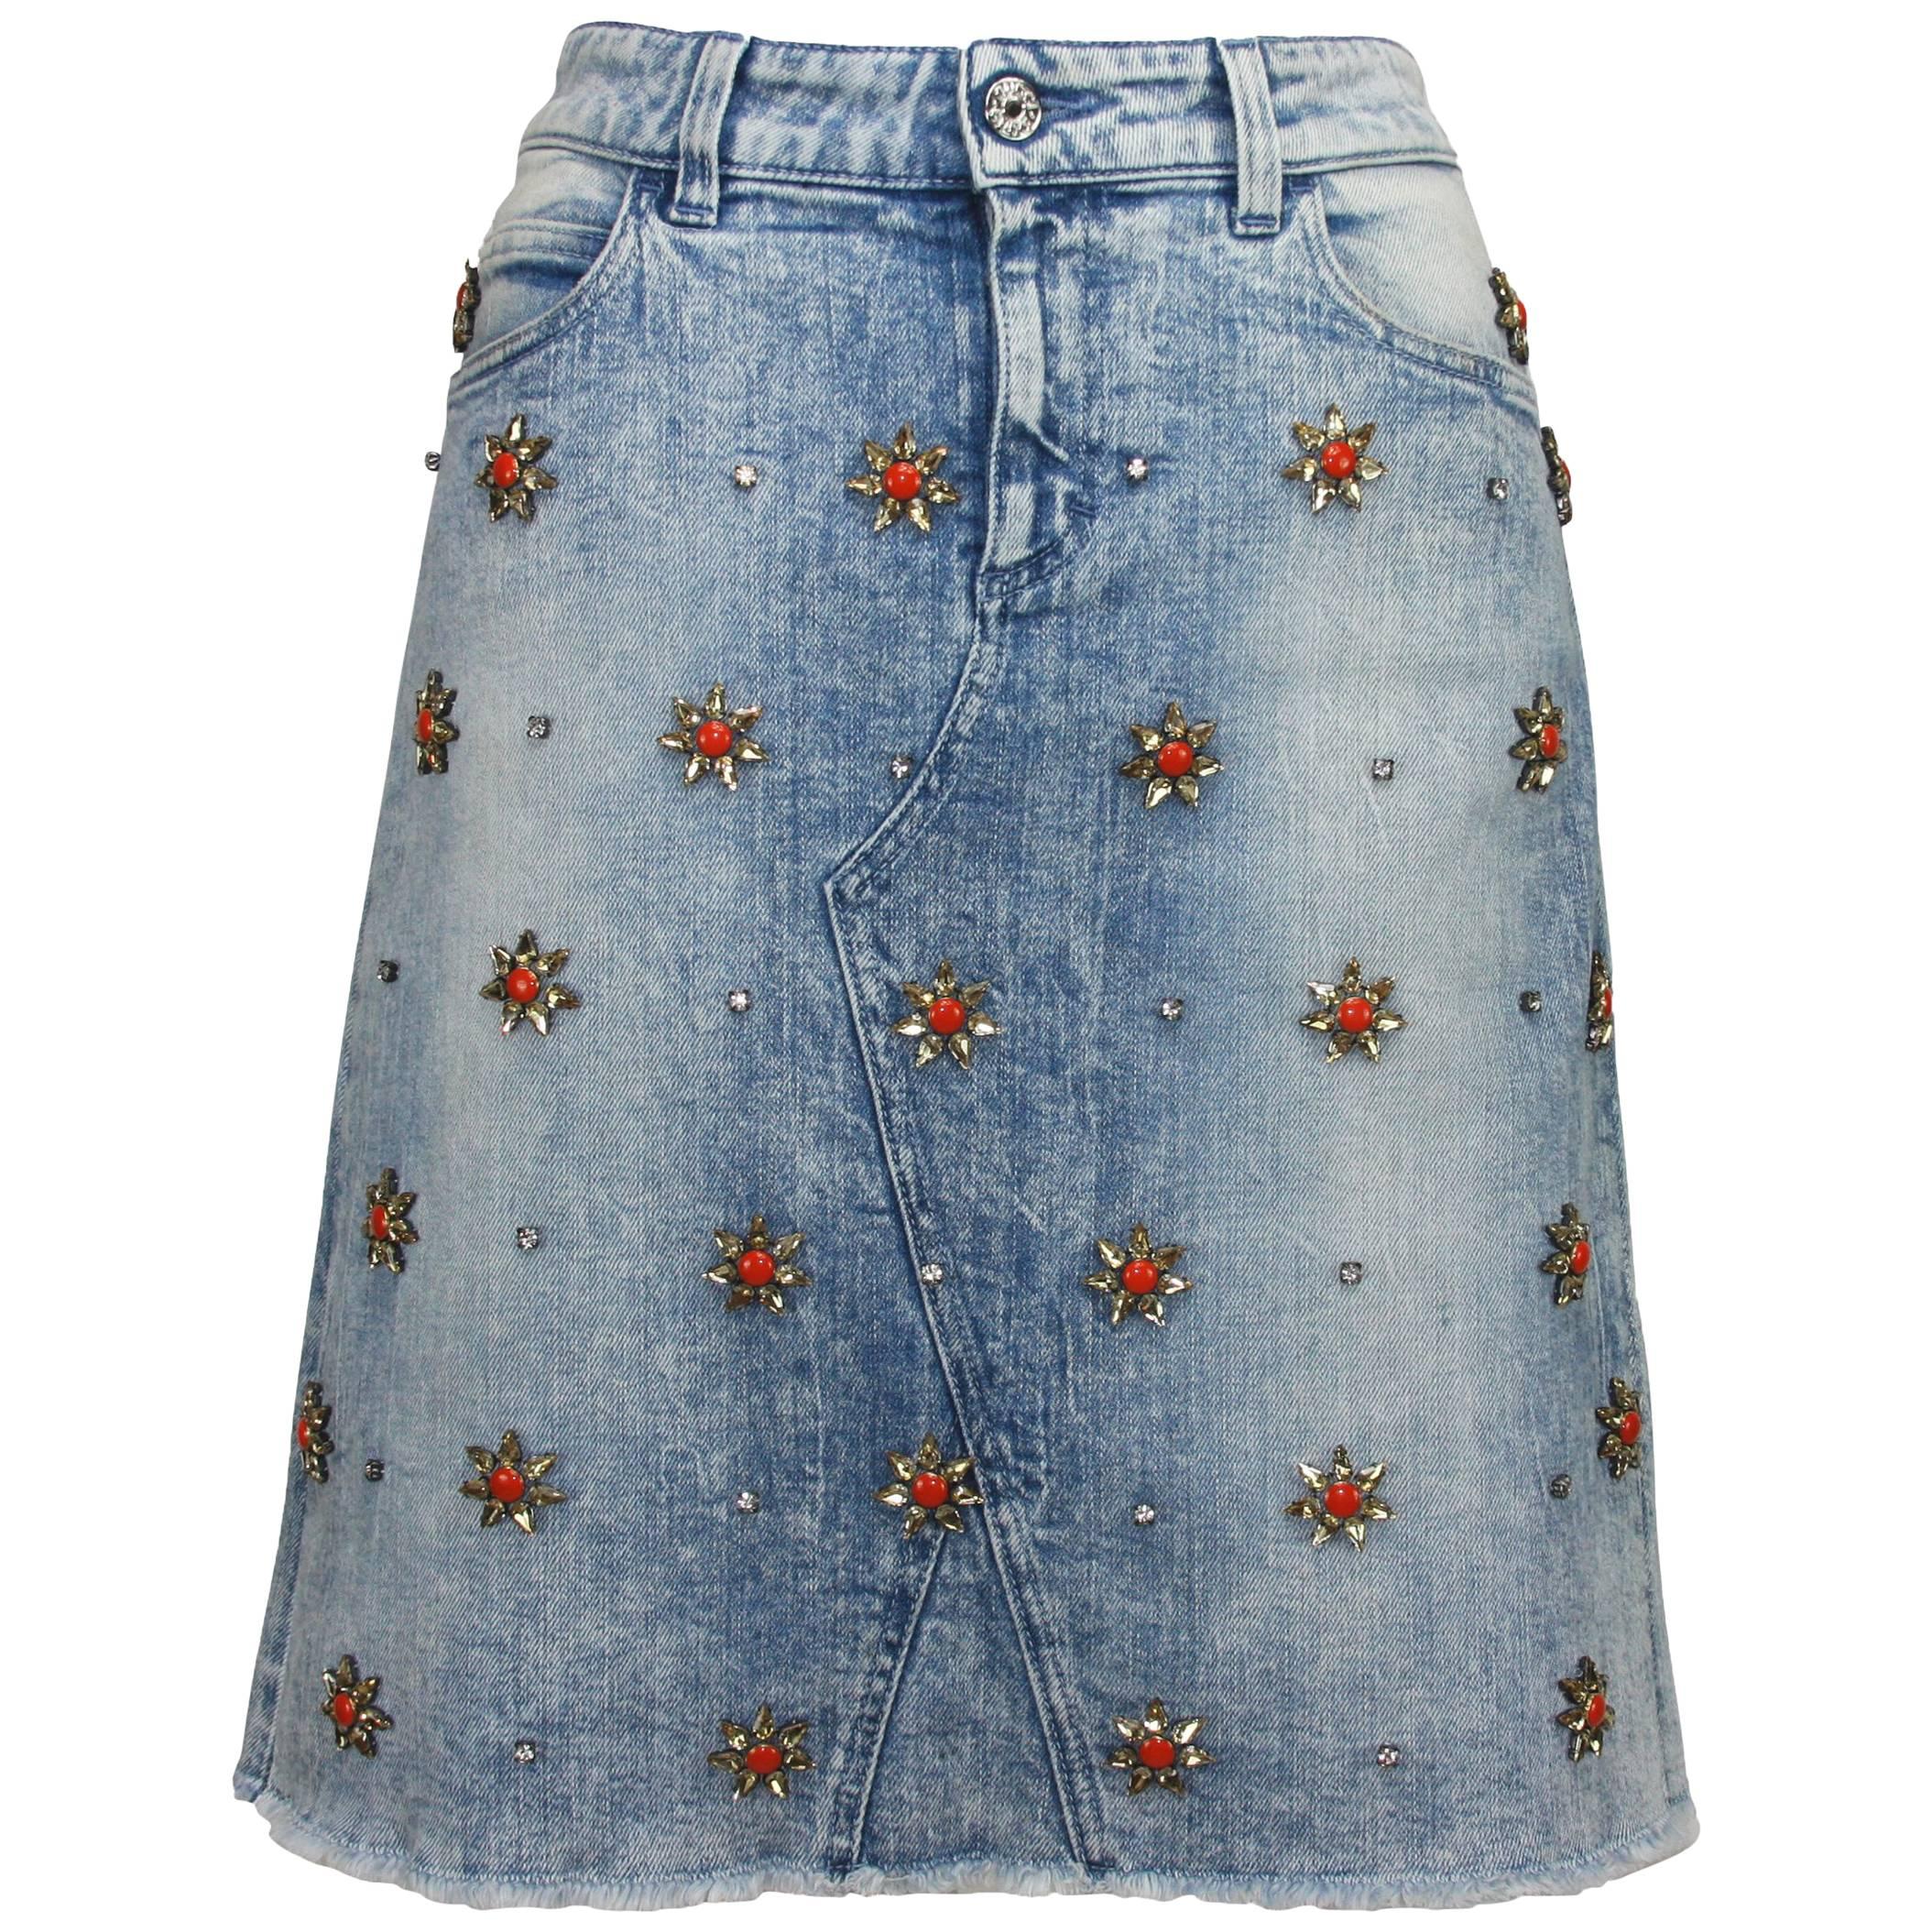 GUCCI Crystal-Embellished Stretch Denim Skirt Recreated After 1999 size 40 - 4